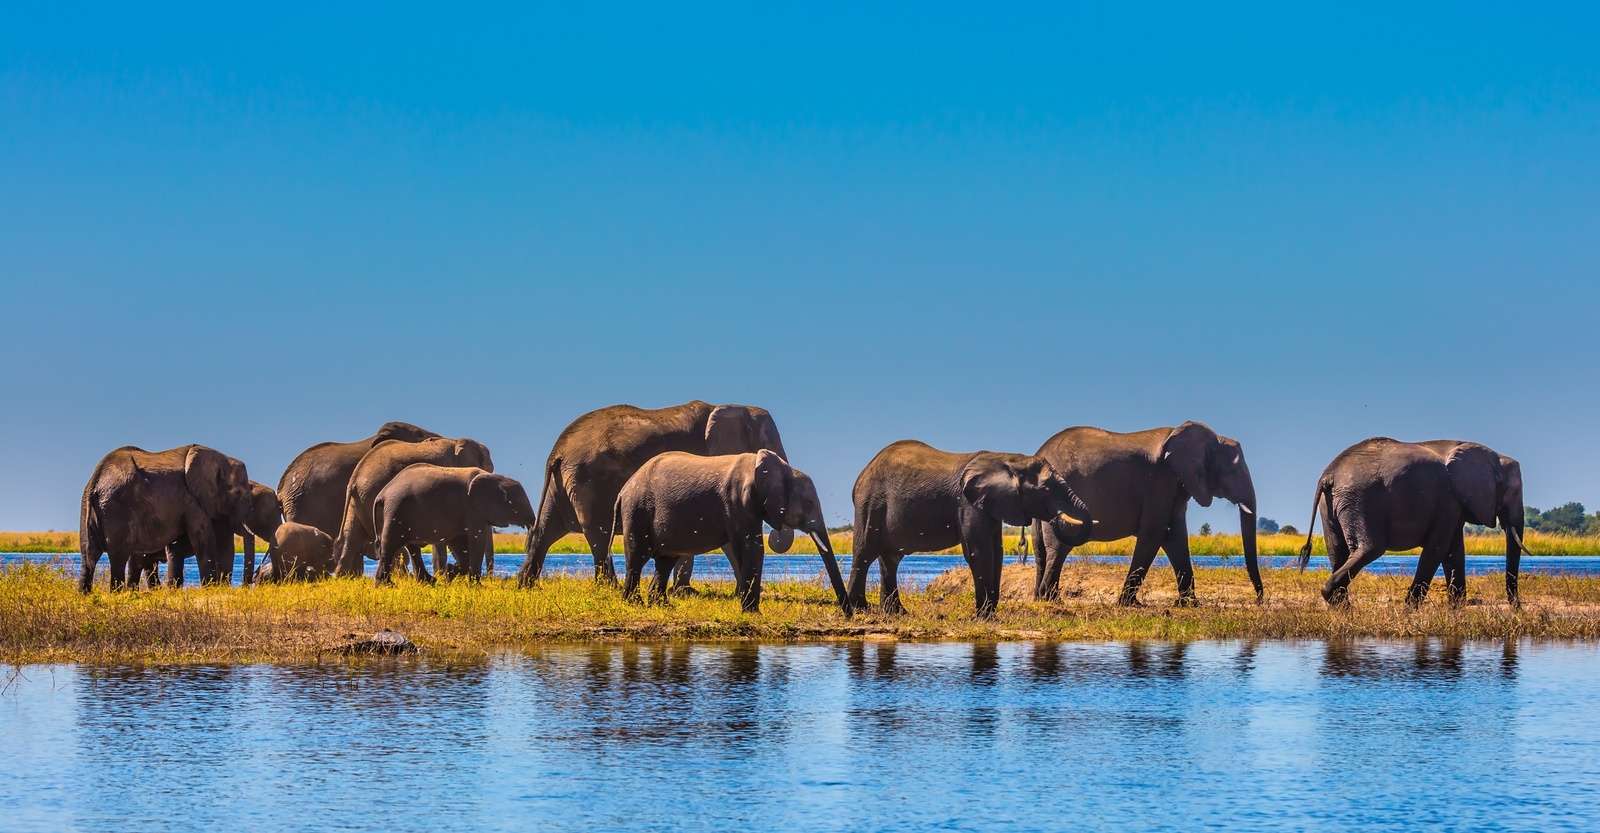 Elephants, Chobe National Park, Botswana.